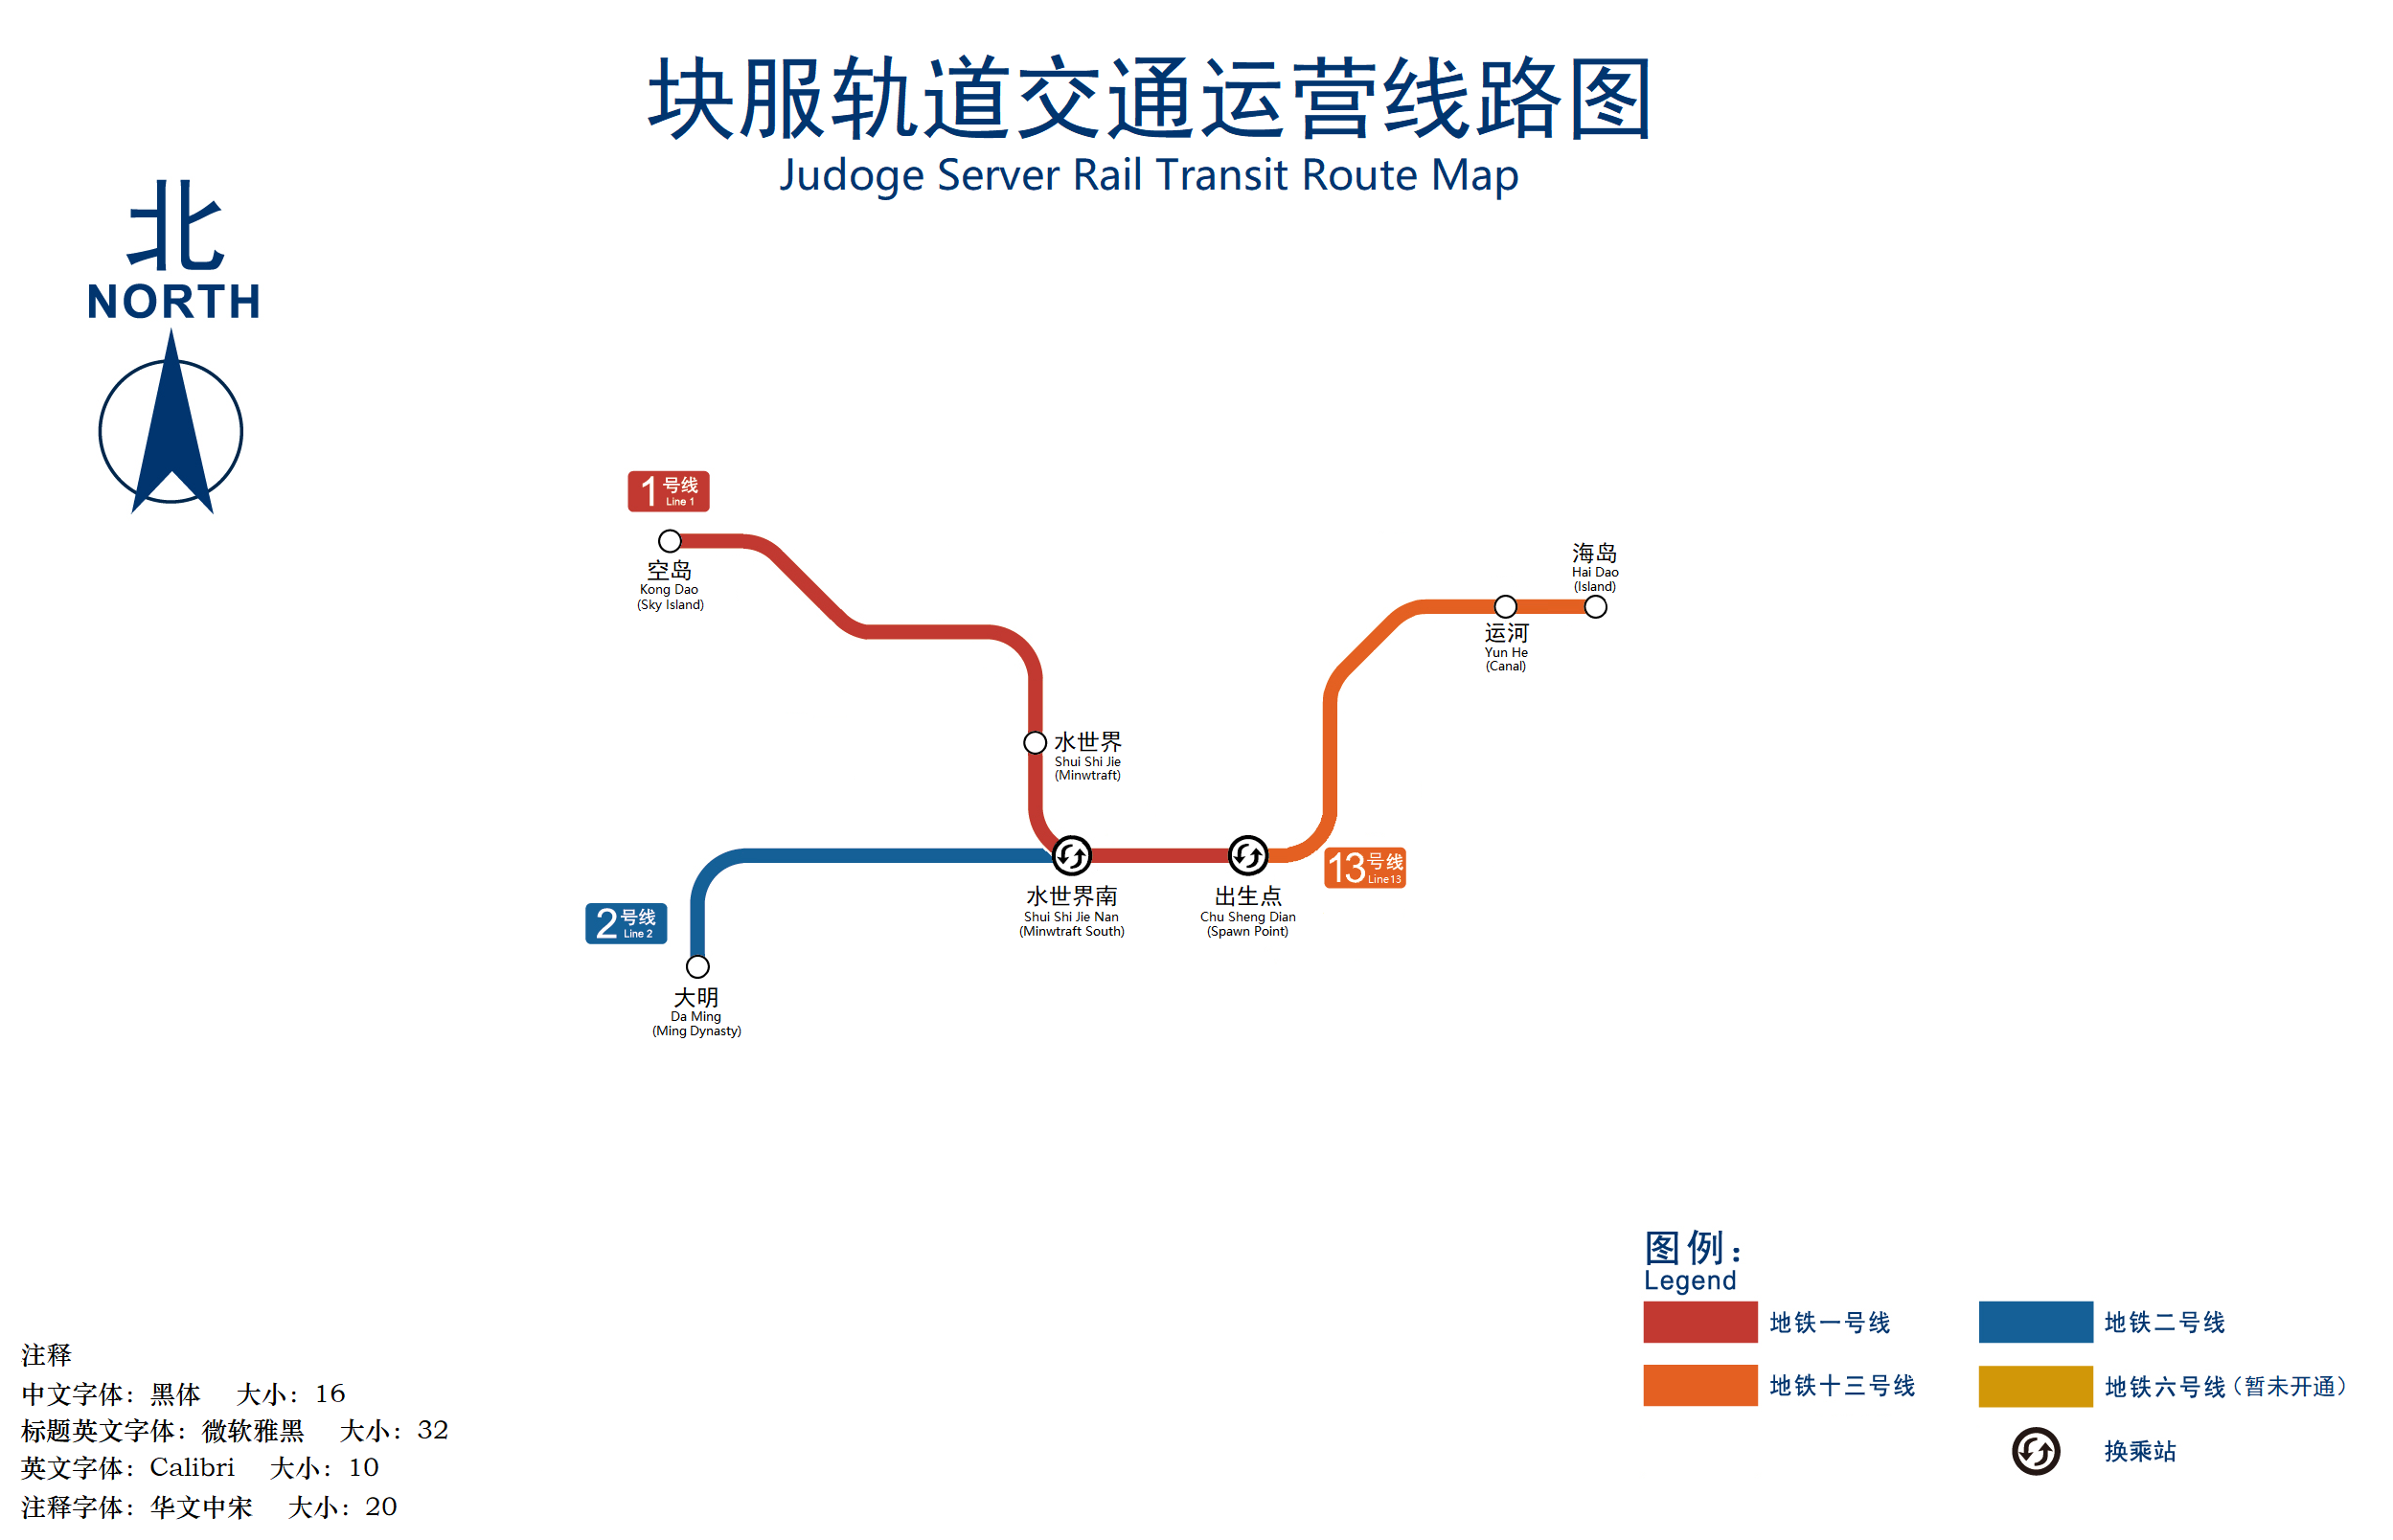 Judoge Server Rail Transit Route Map-10.5.png